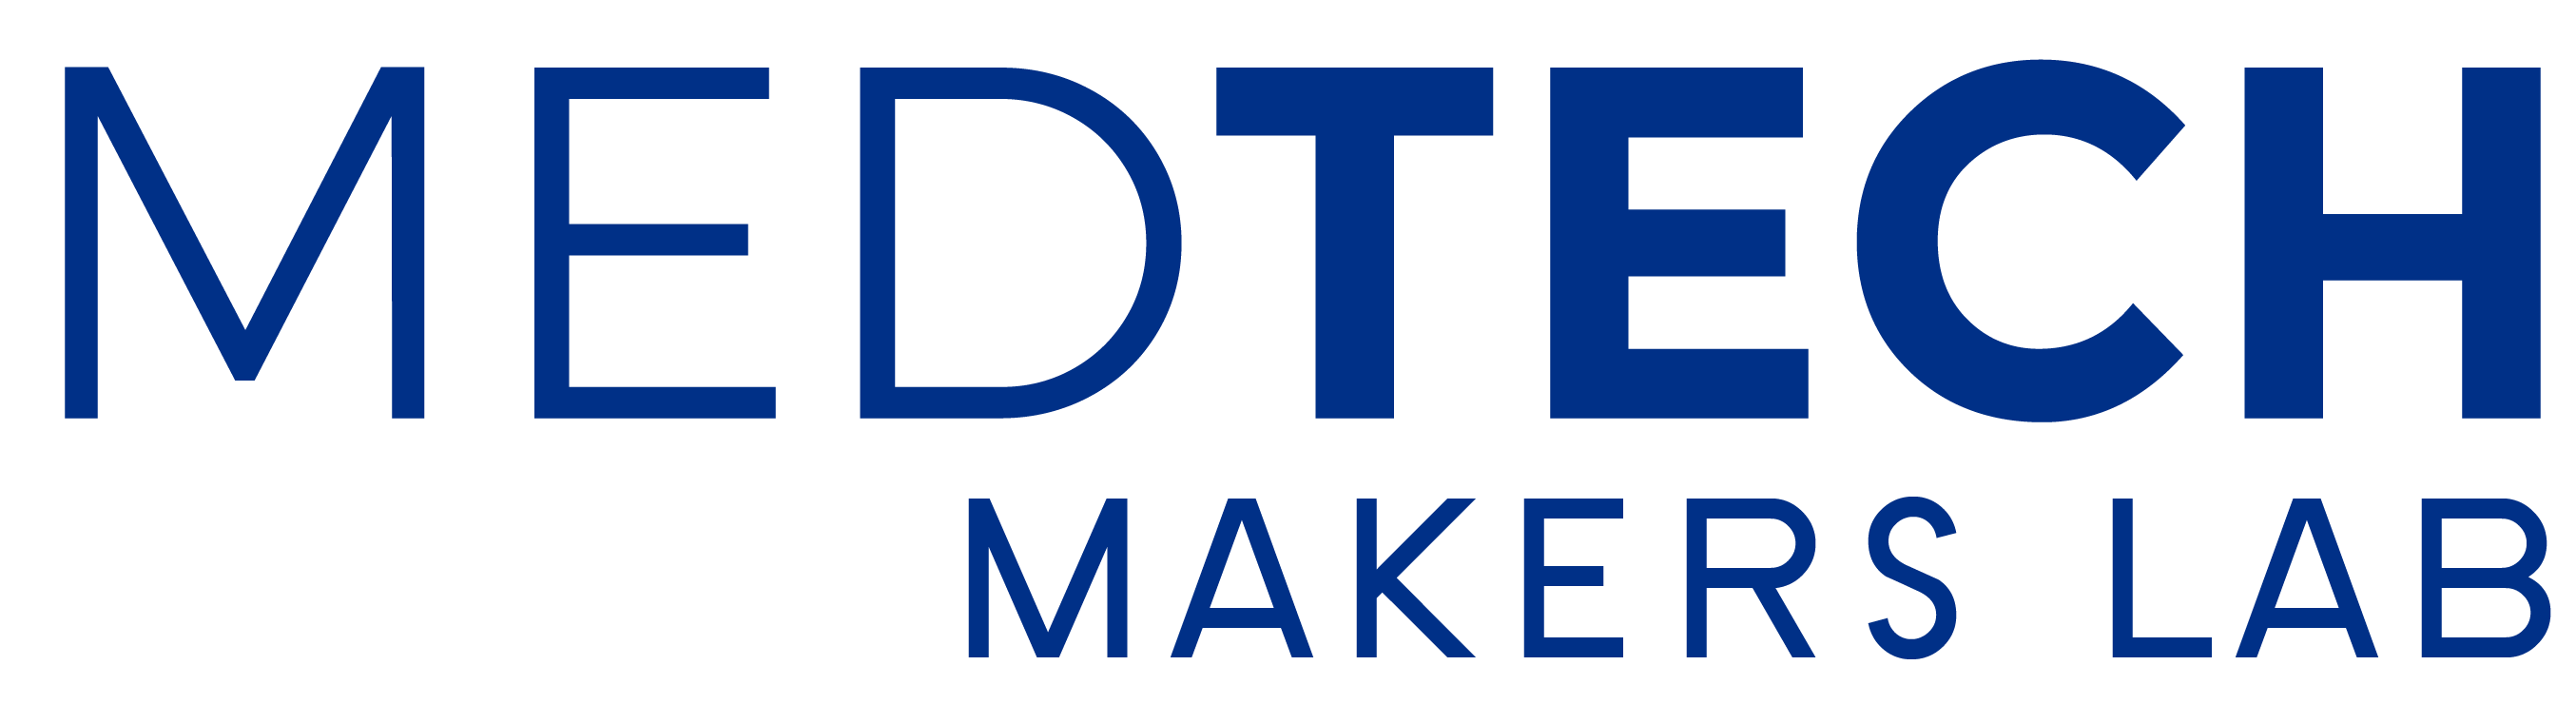 MedTech Makers Lab Logo